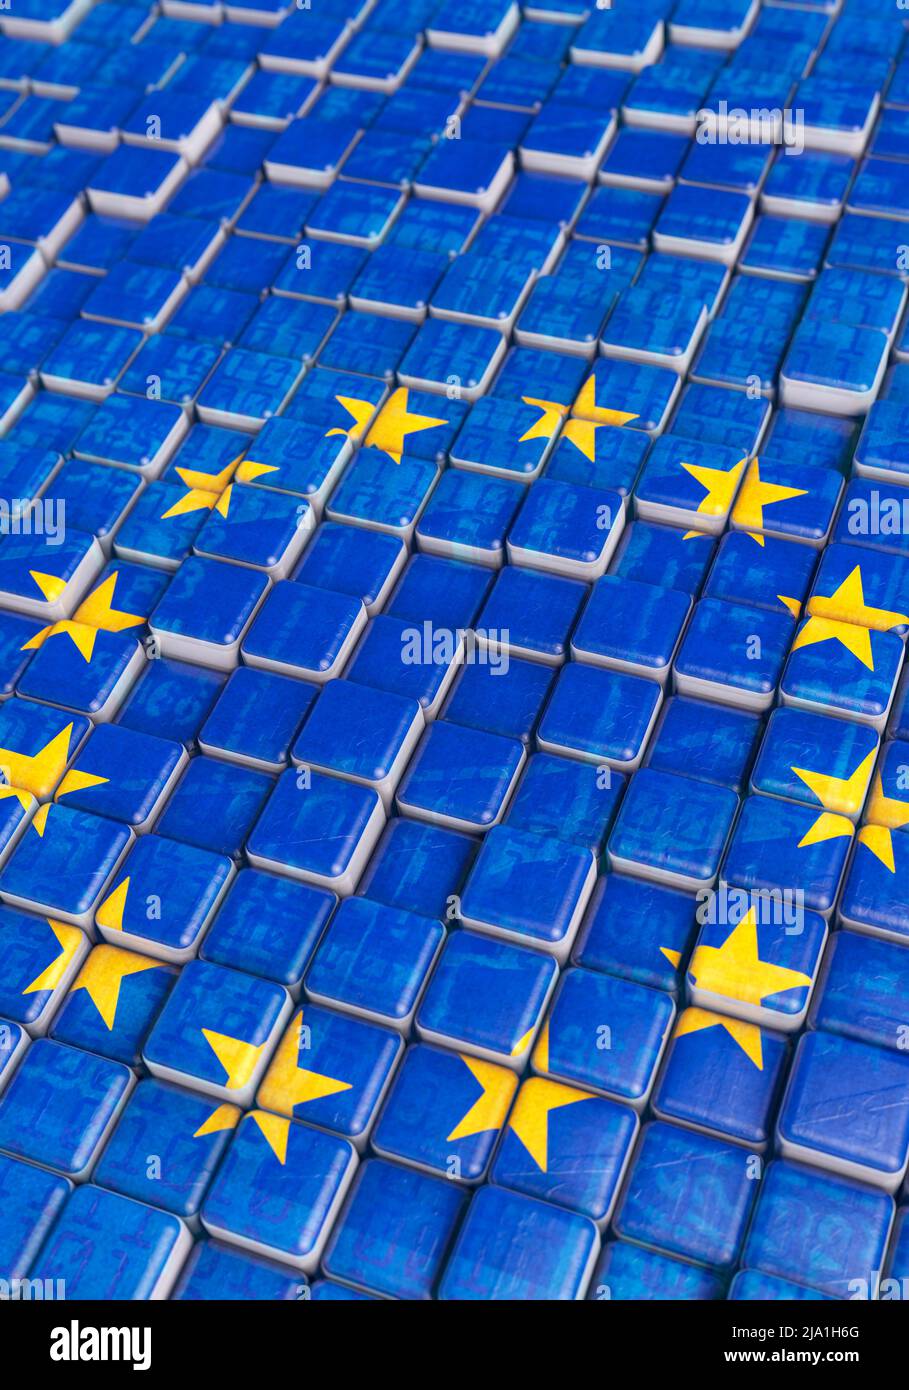 Symbolbild zum Thema Digitalisierung in Europa. Stock Photo